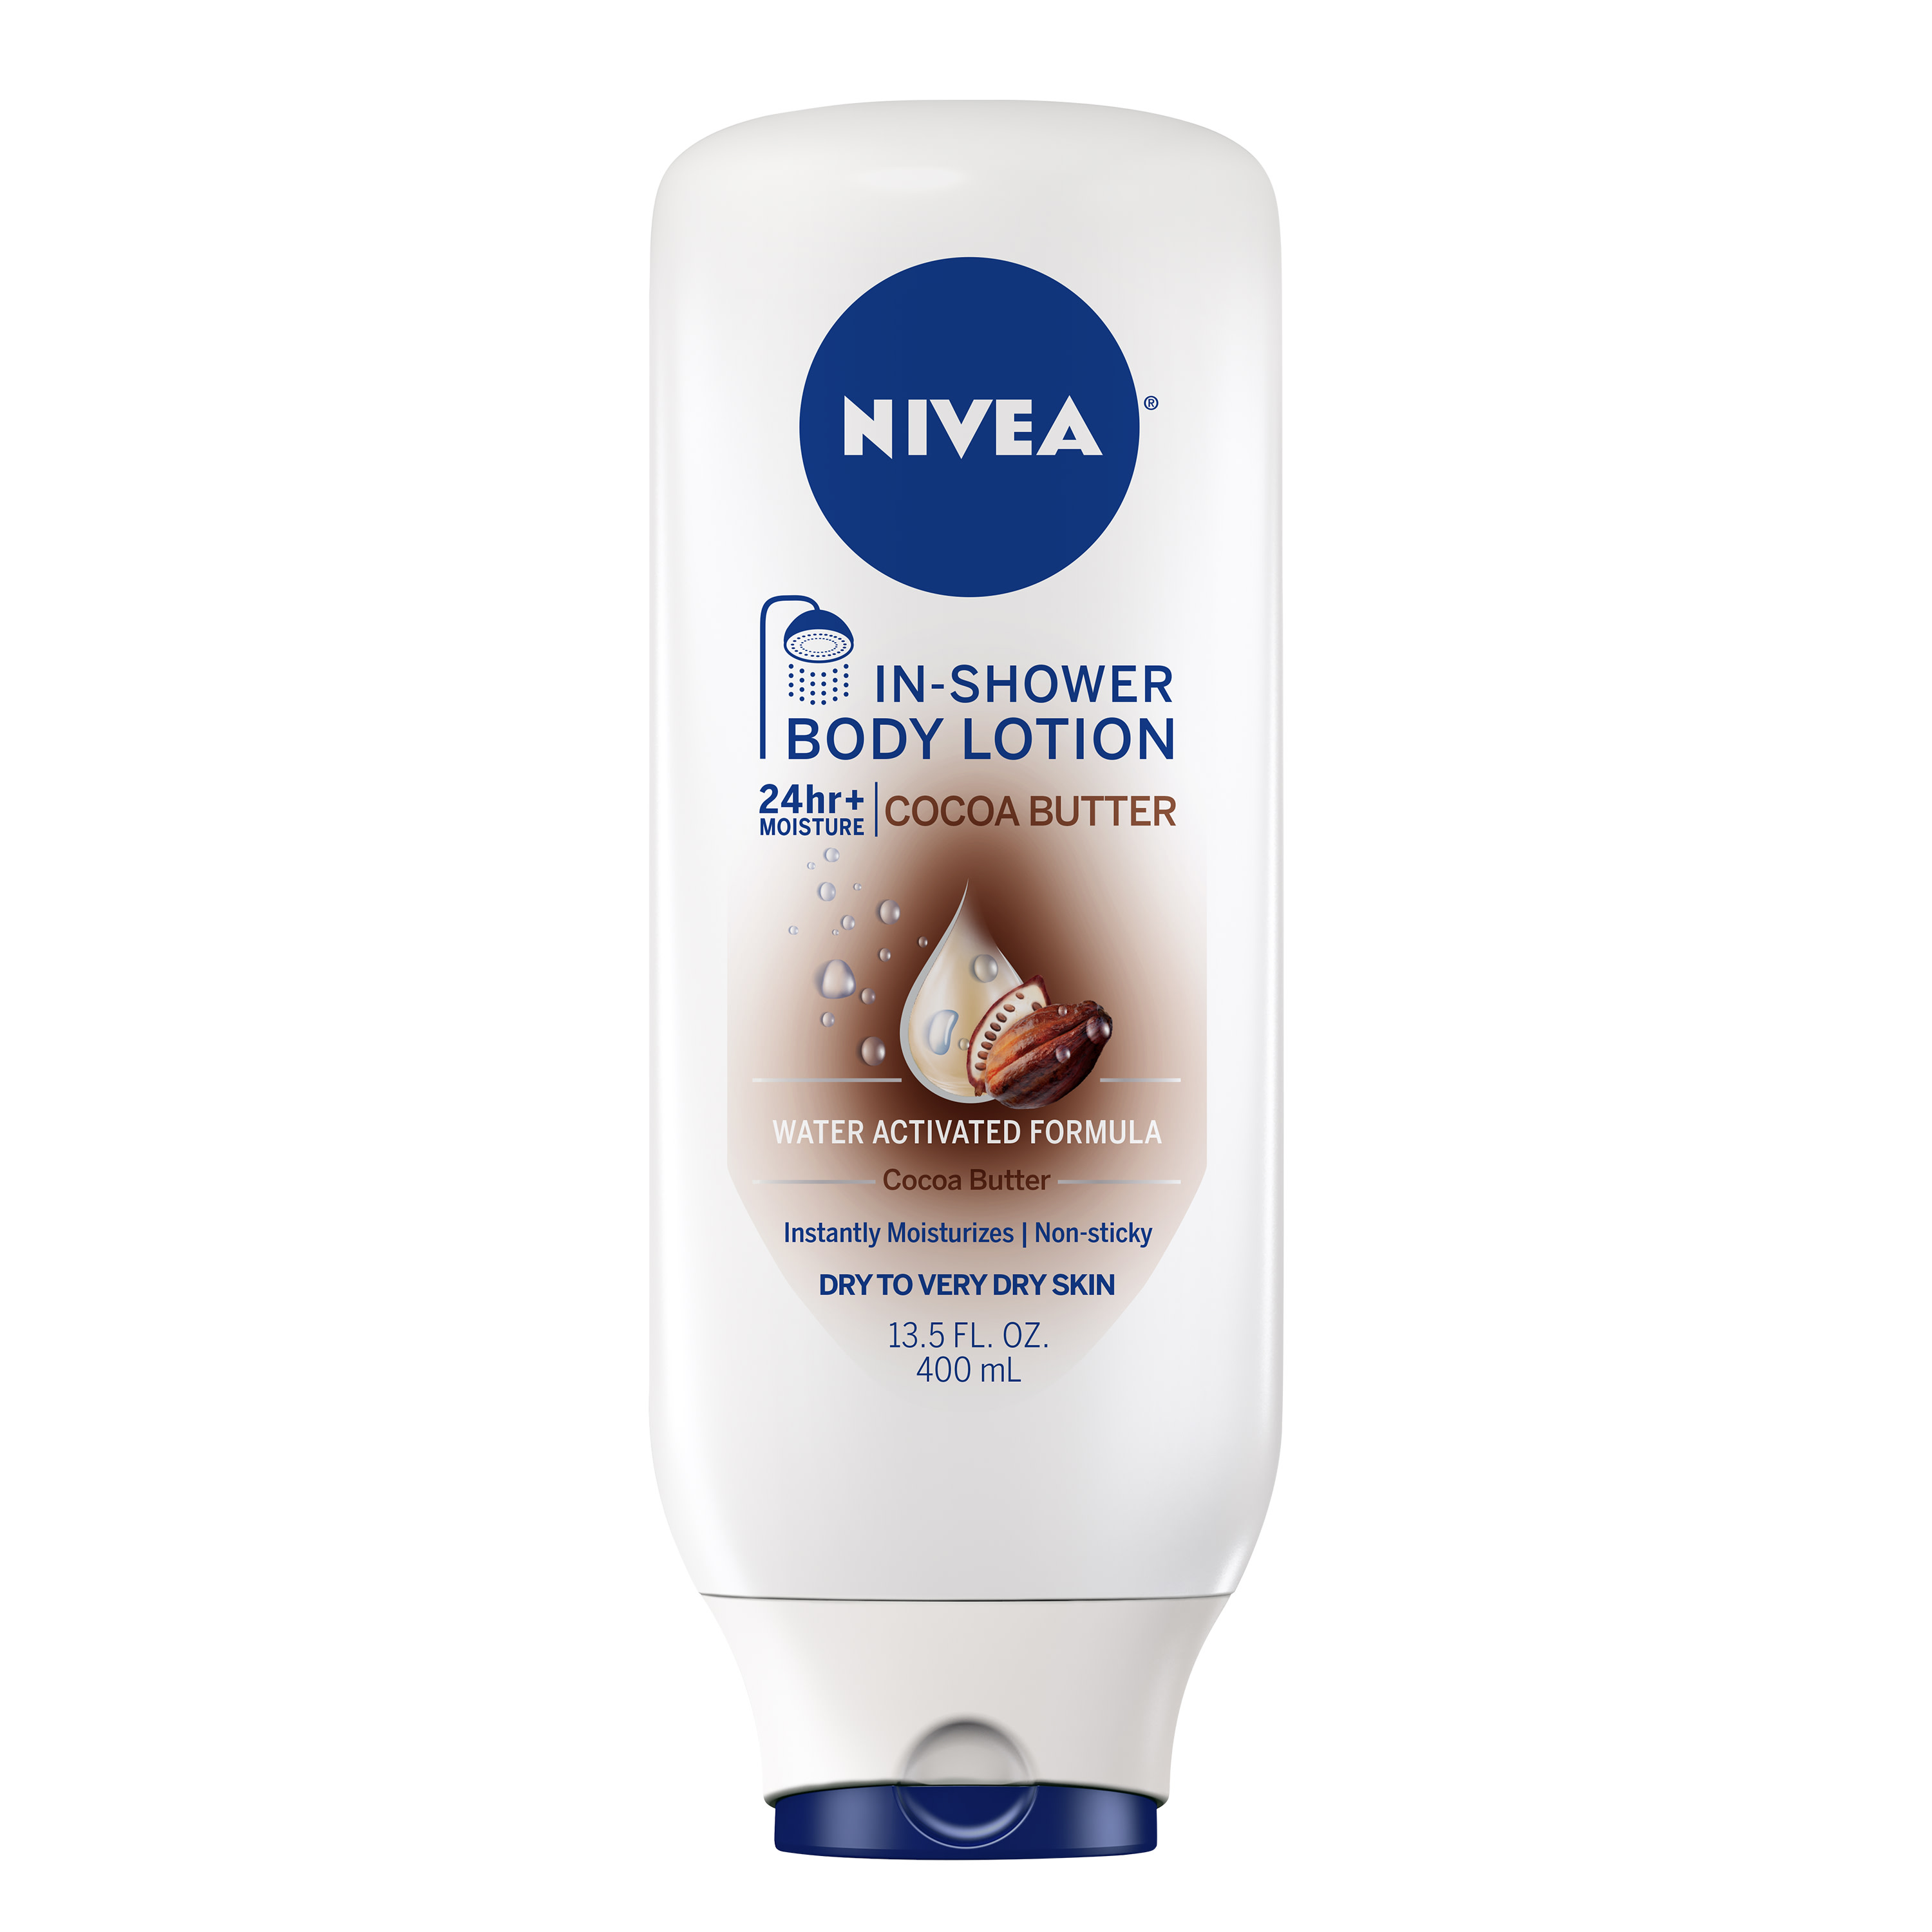 NIVEA Cocoa Butter In Shower Lotion, 13.5 Fl Oz Bottle - image 1 of 4